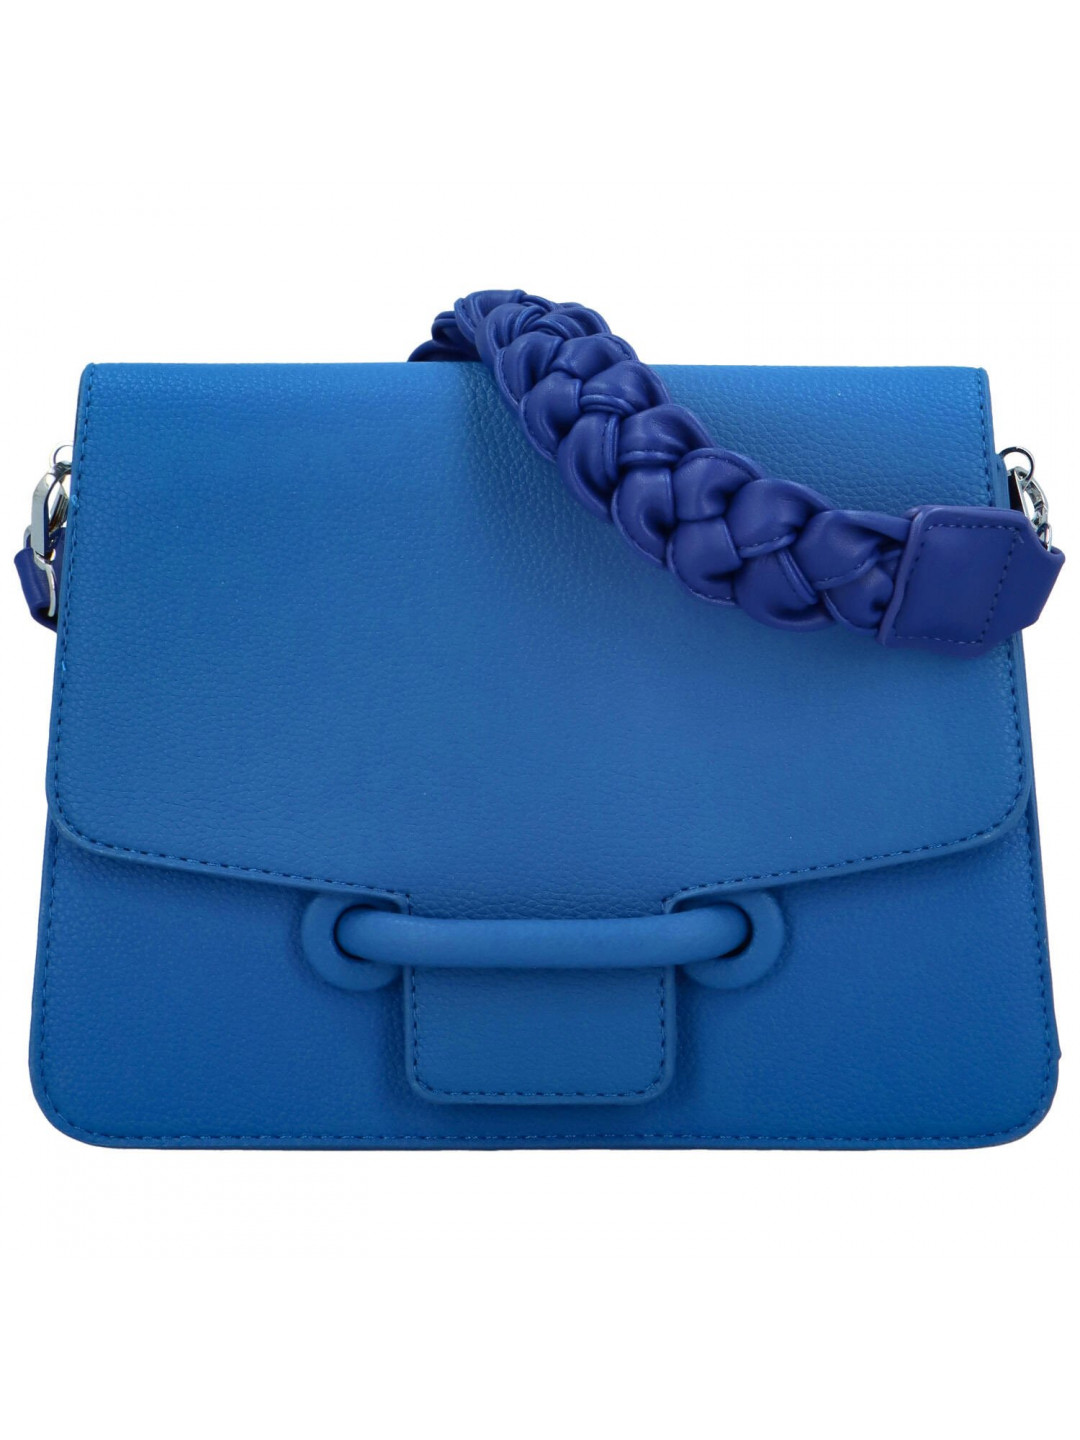 Dámská kabelka na rameno modrá – Maria C Welyna